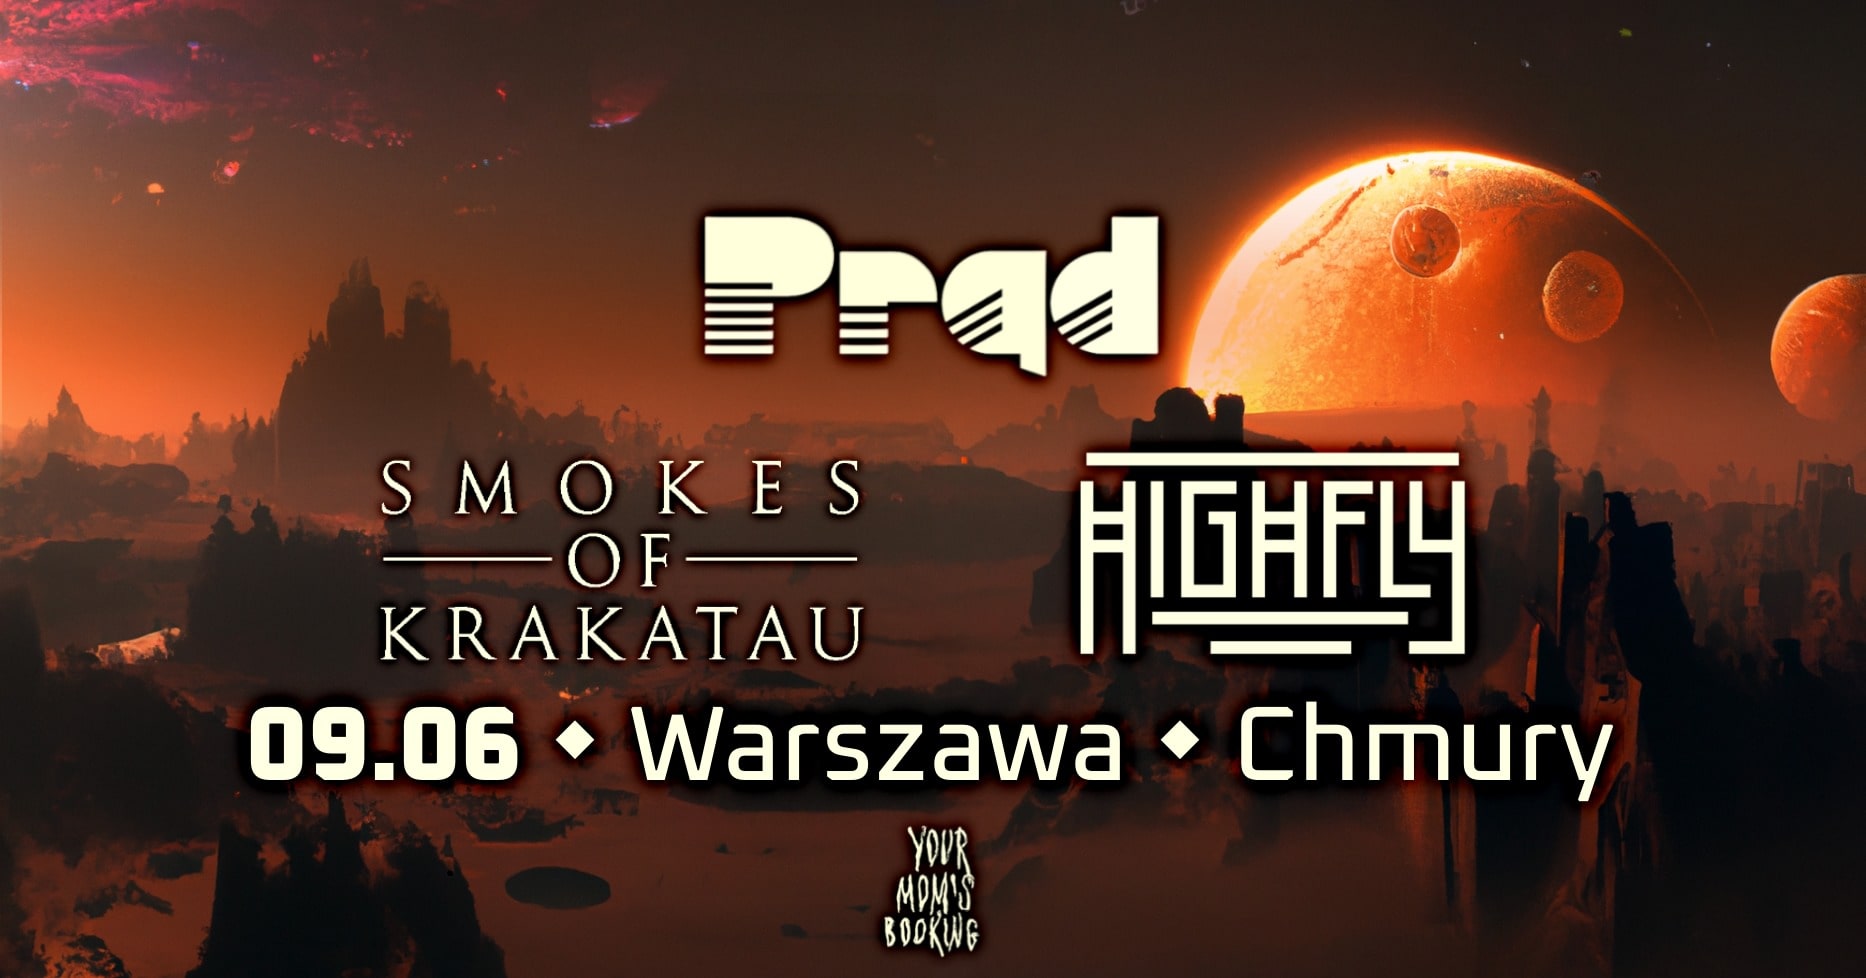 Electric Sunset Tour 2023: WARSZAWA – Prąd / Smokes of Krakatau / HIGHFLY